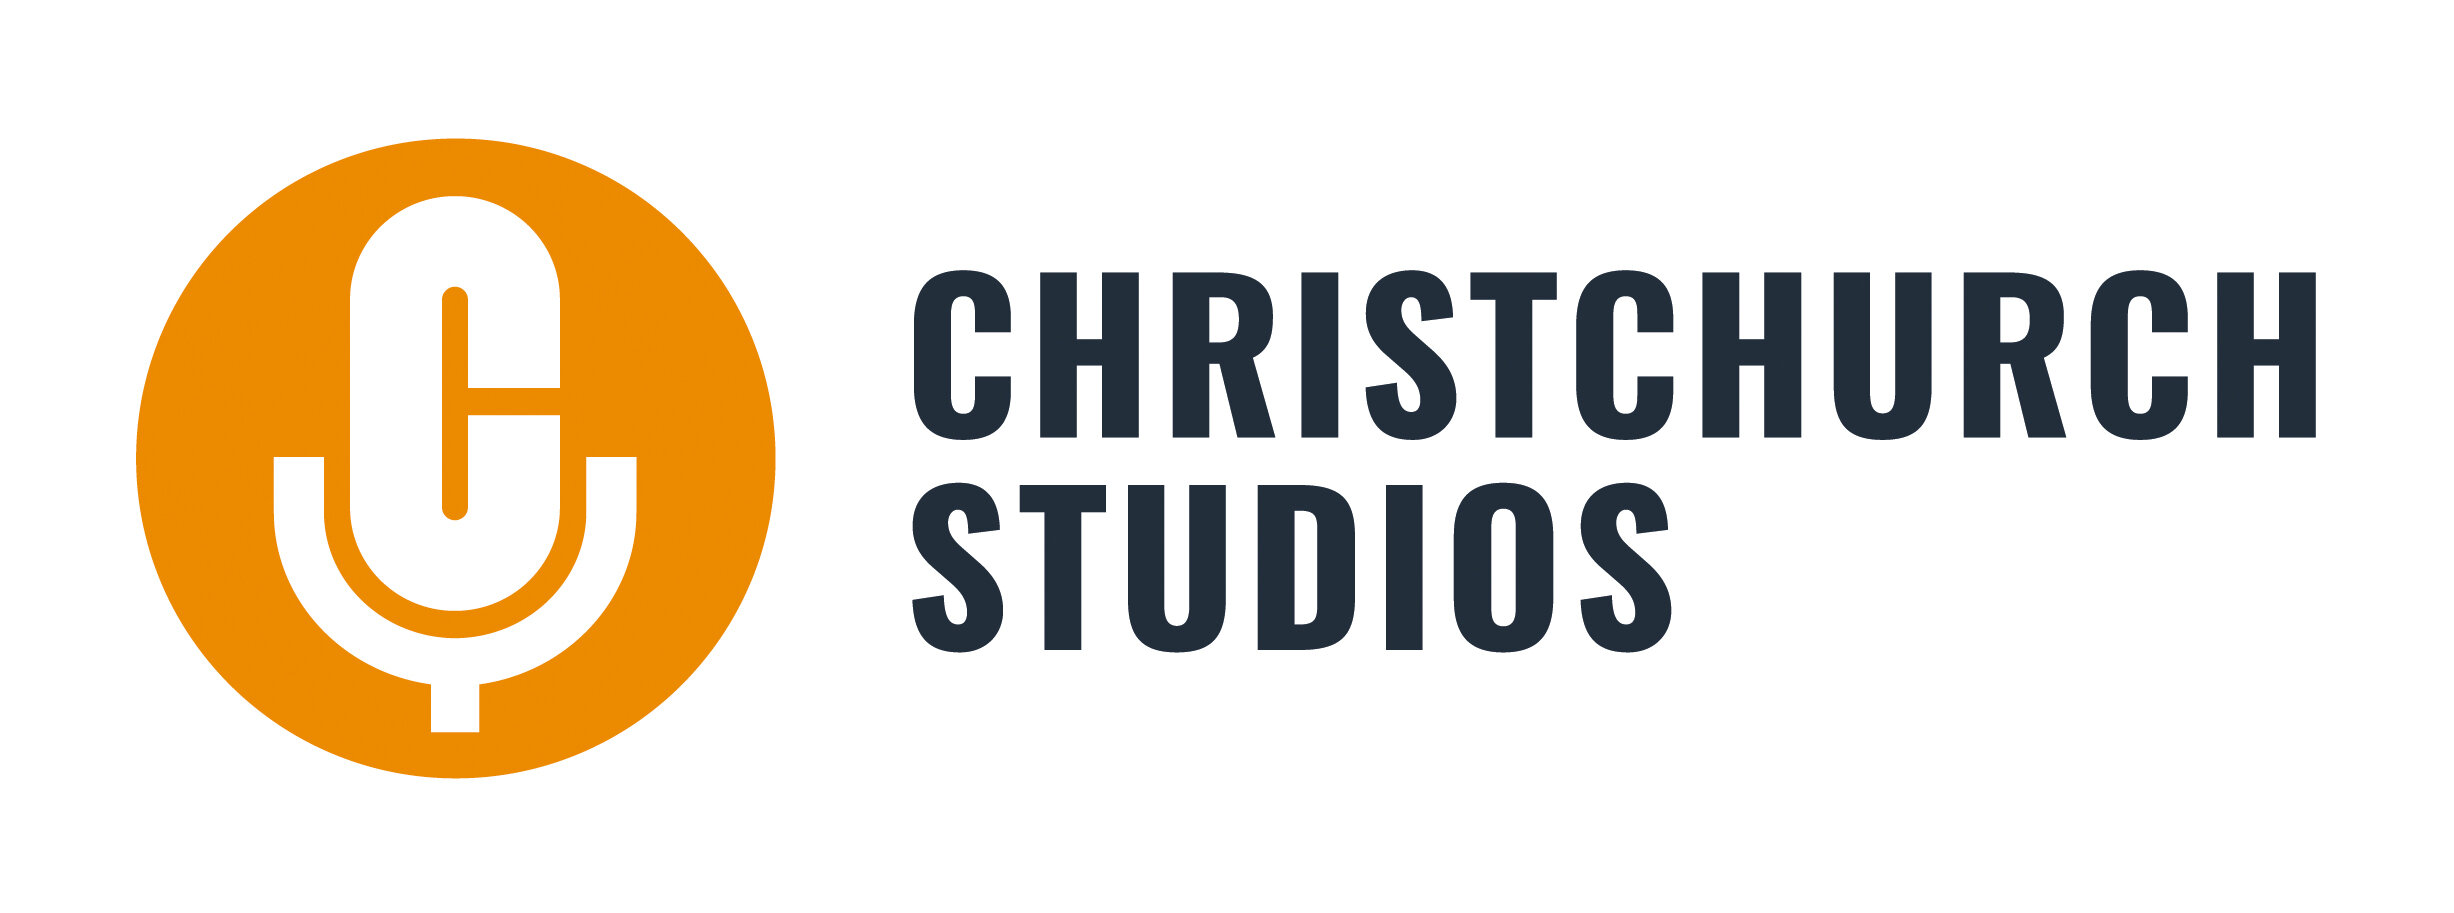 Christchurch Studios